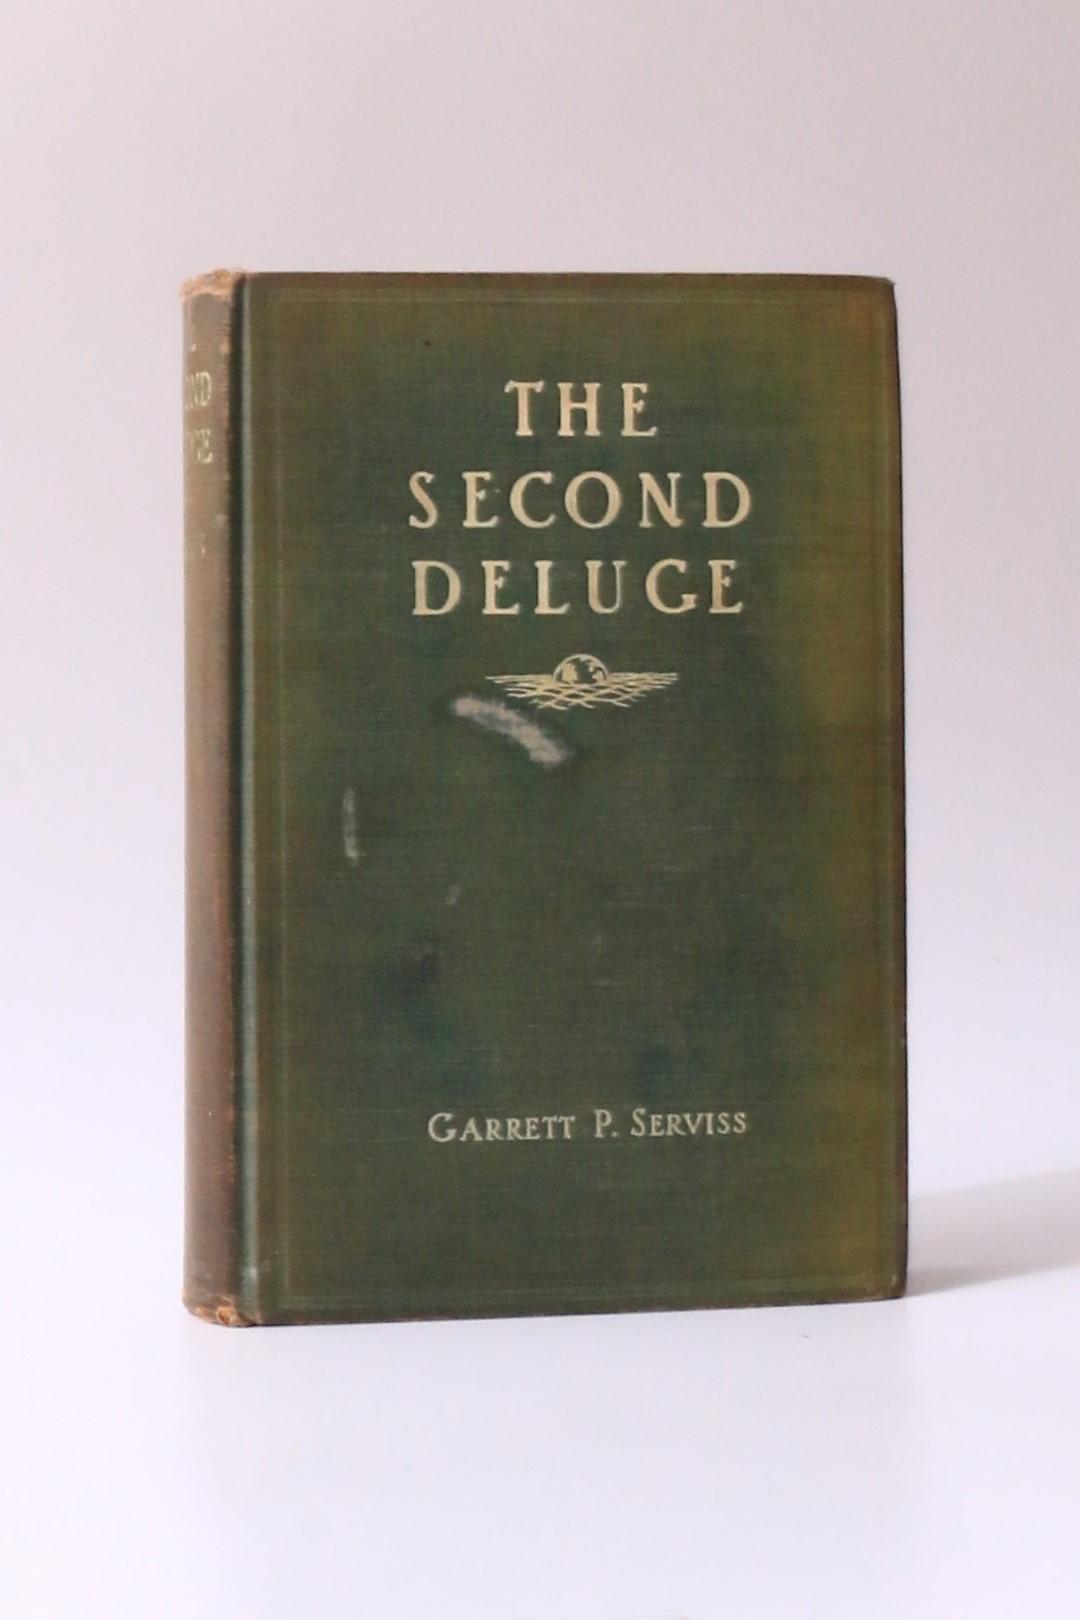 Garrett P. Serviss - The Second Deluge - McBride, Nast & Co., 1912, First Edition.